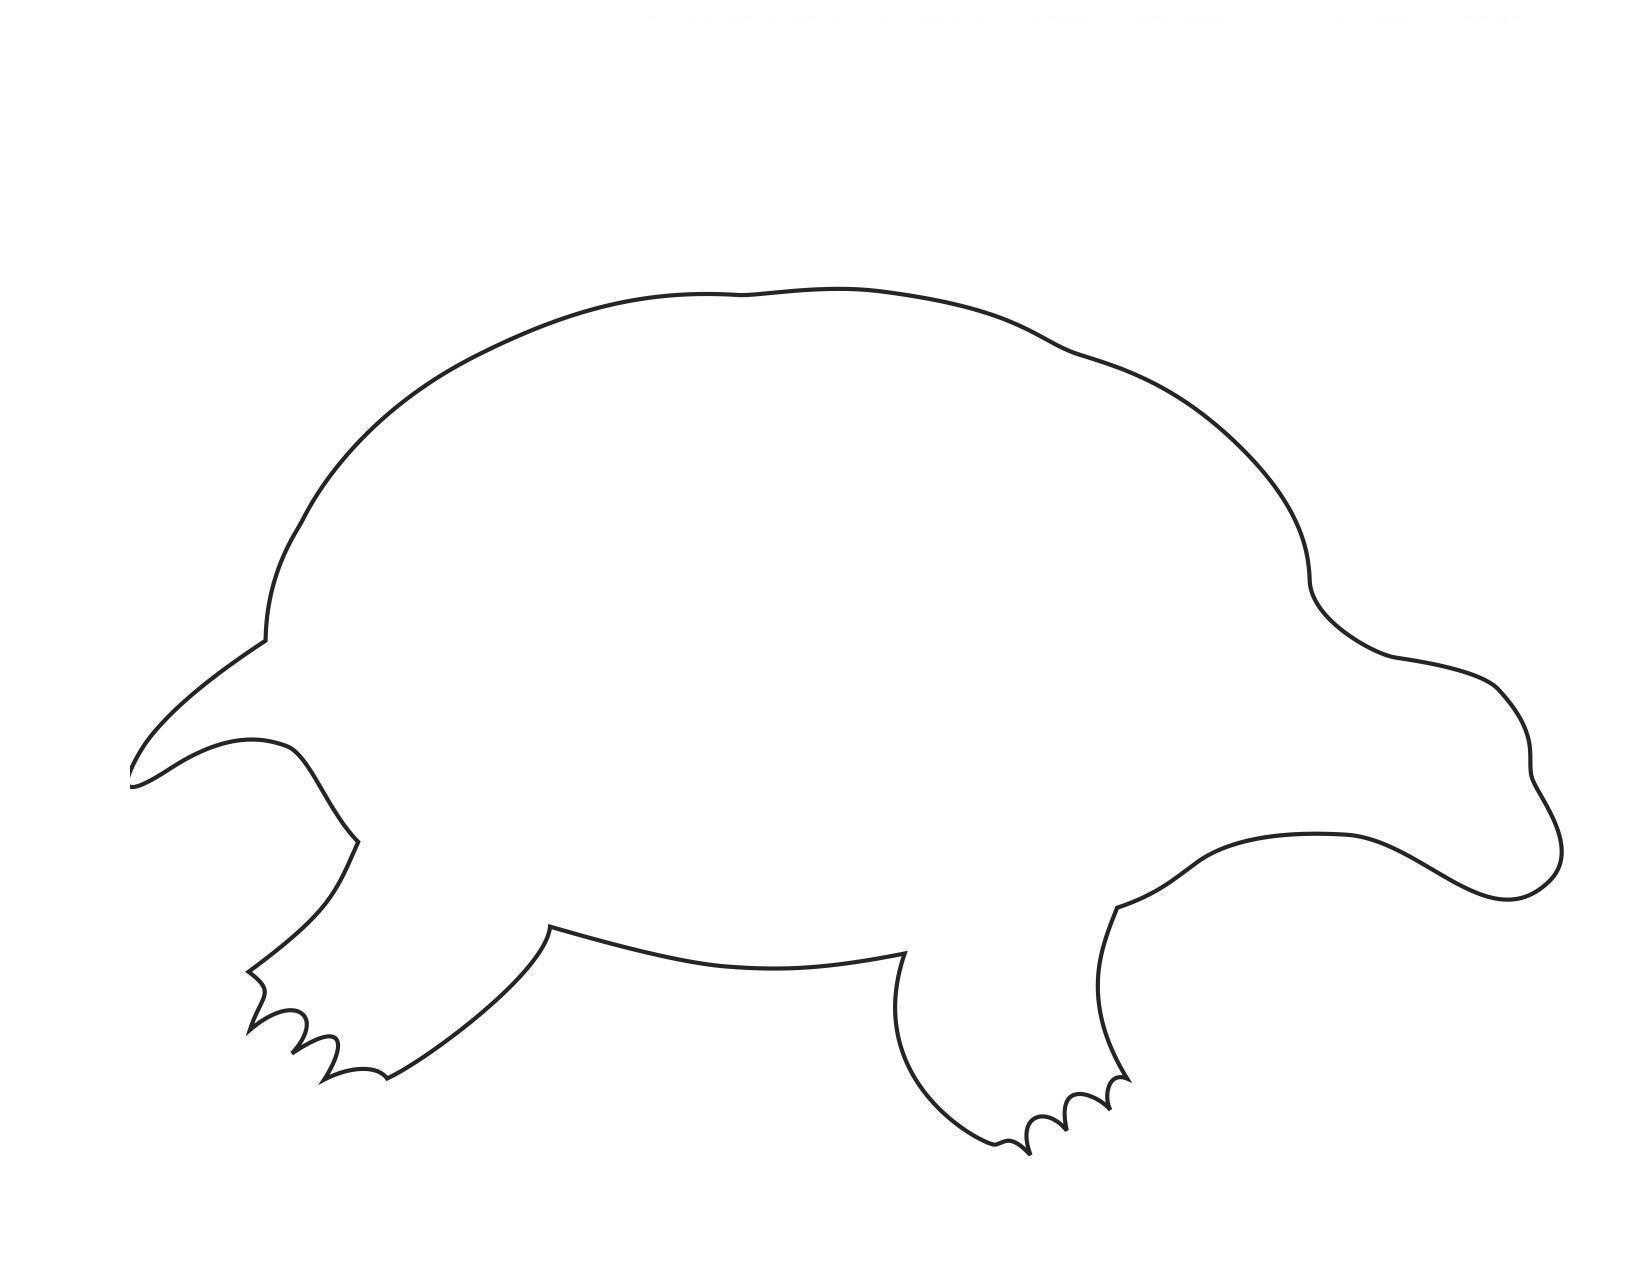 Название: Раскраска Черепаха. Категория: Животные. Теги: Черепаха.